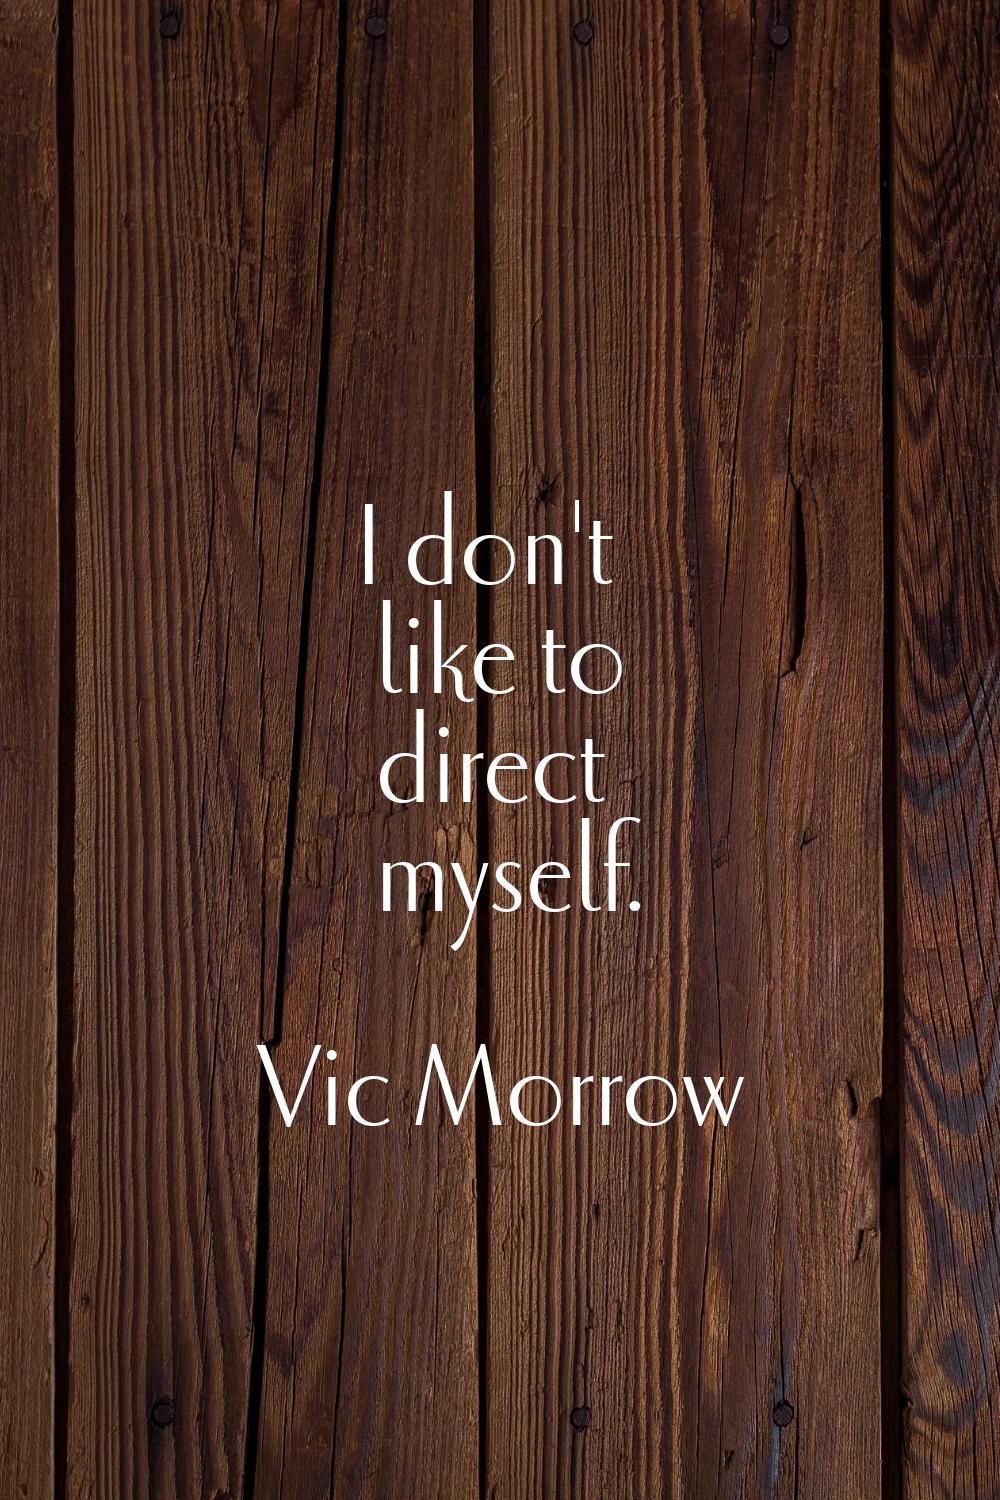 I don't like to direct myself.